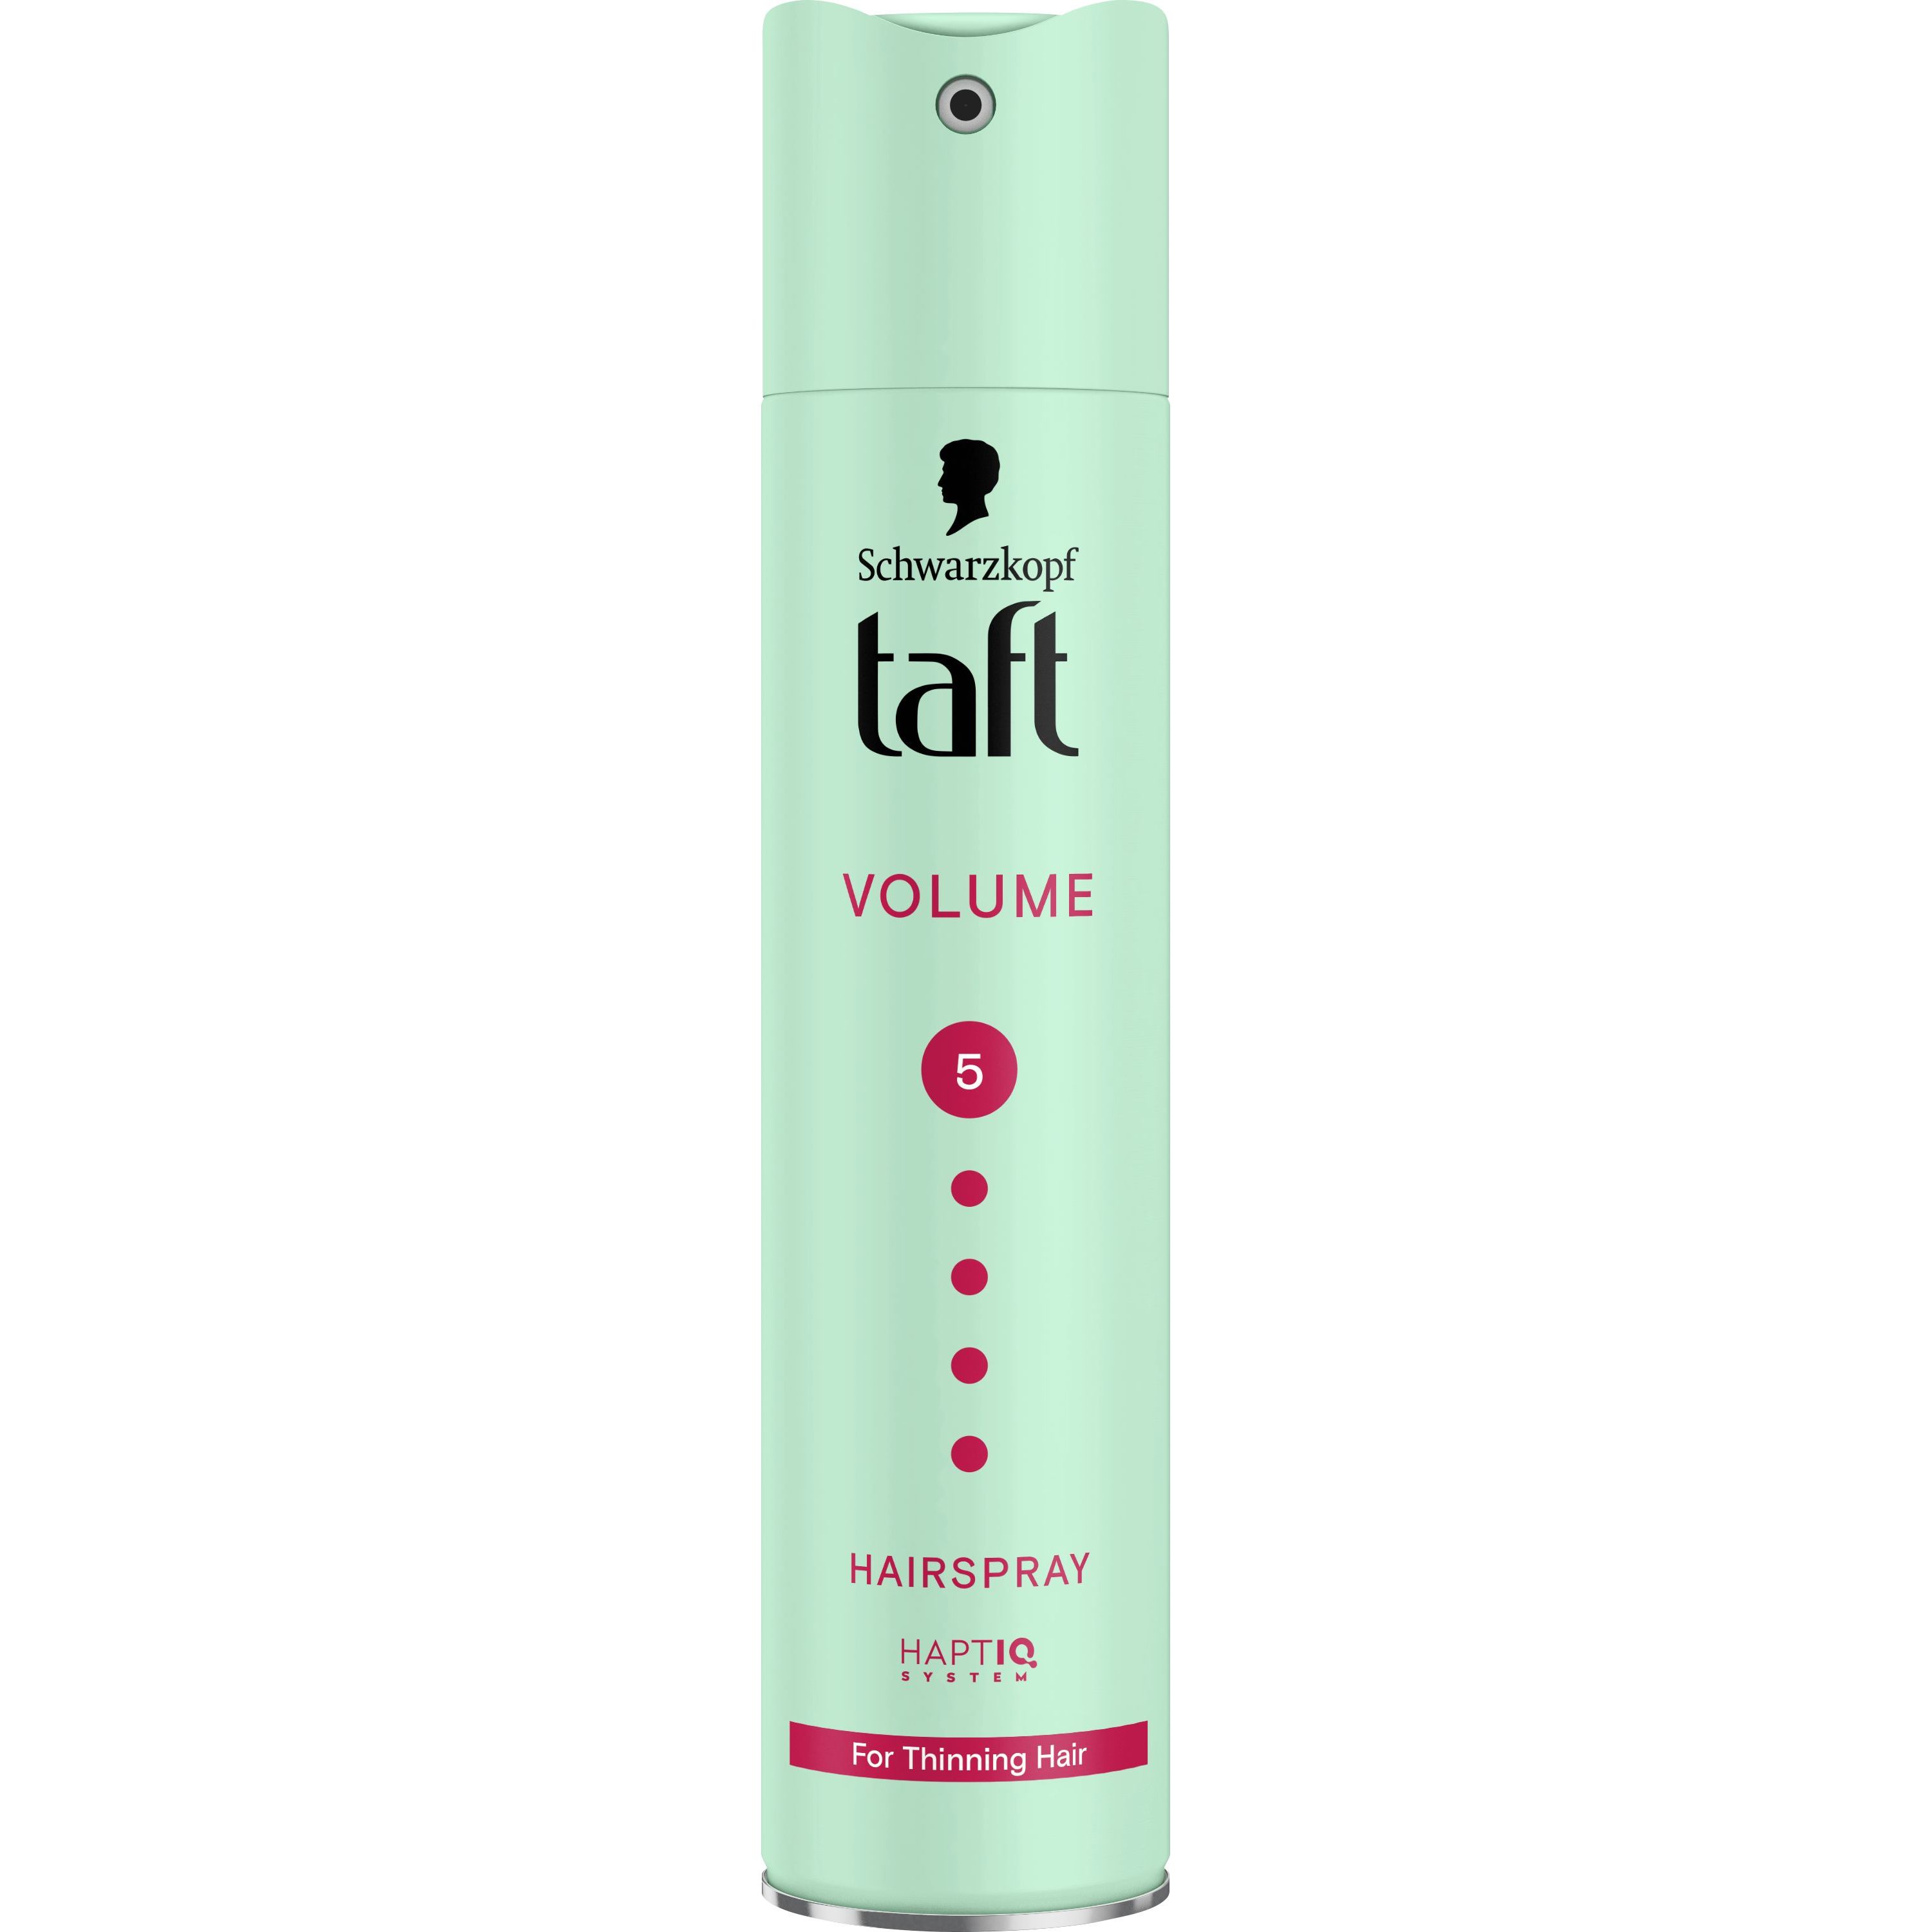 Лак Taft Volume 5 для нормального та тонкого волосся 250 мл - фото 1